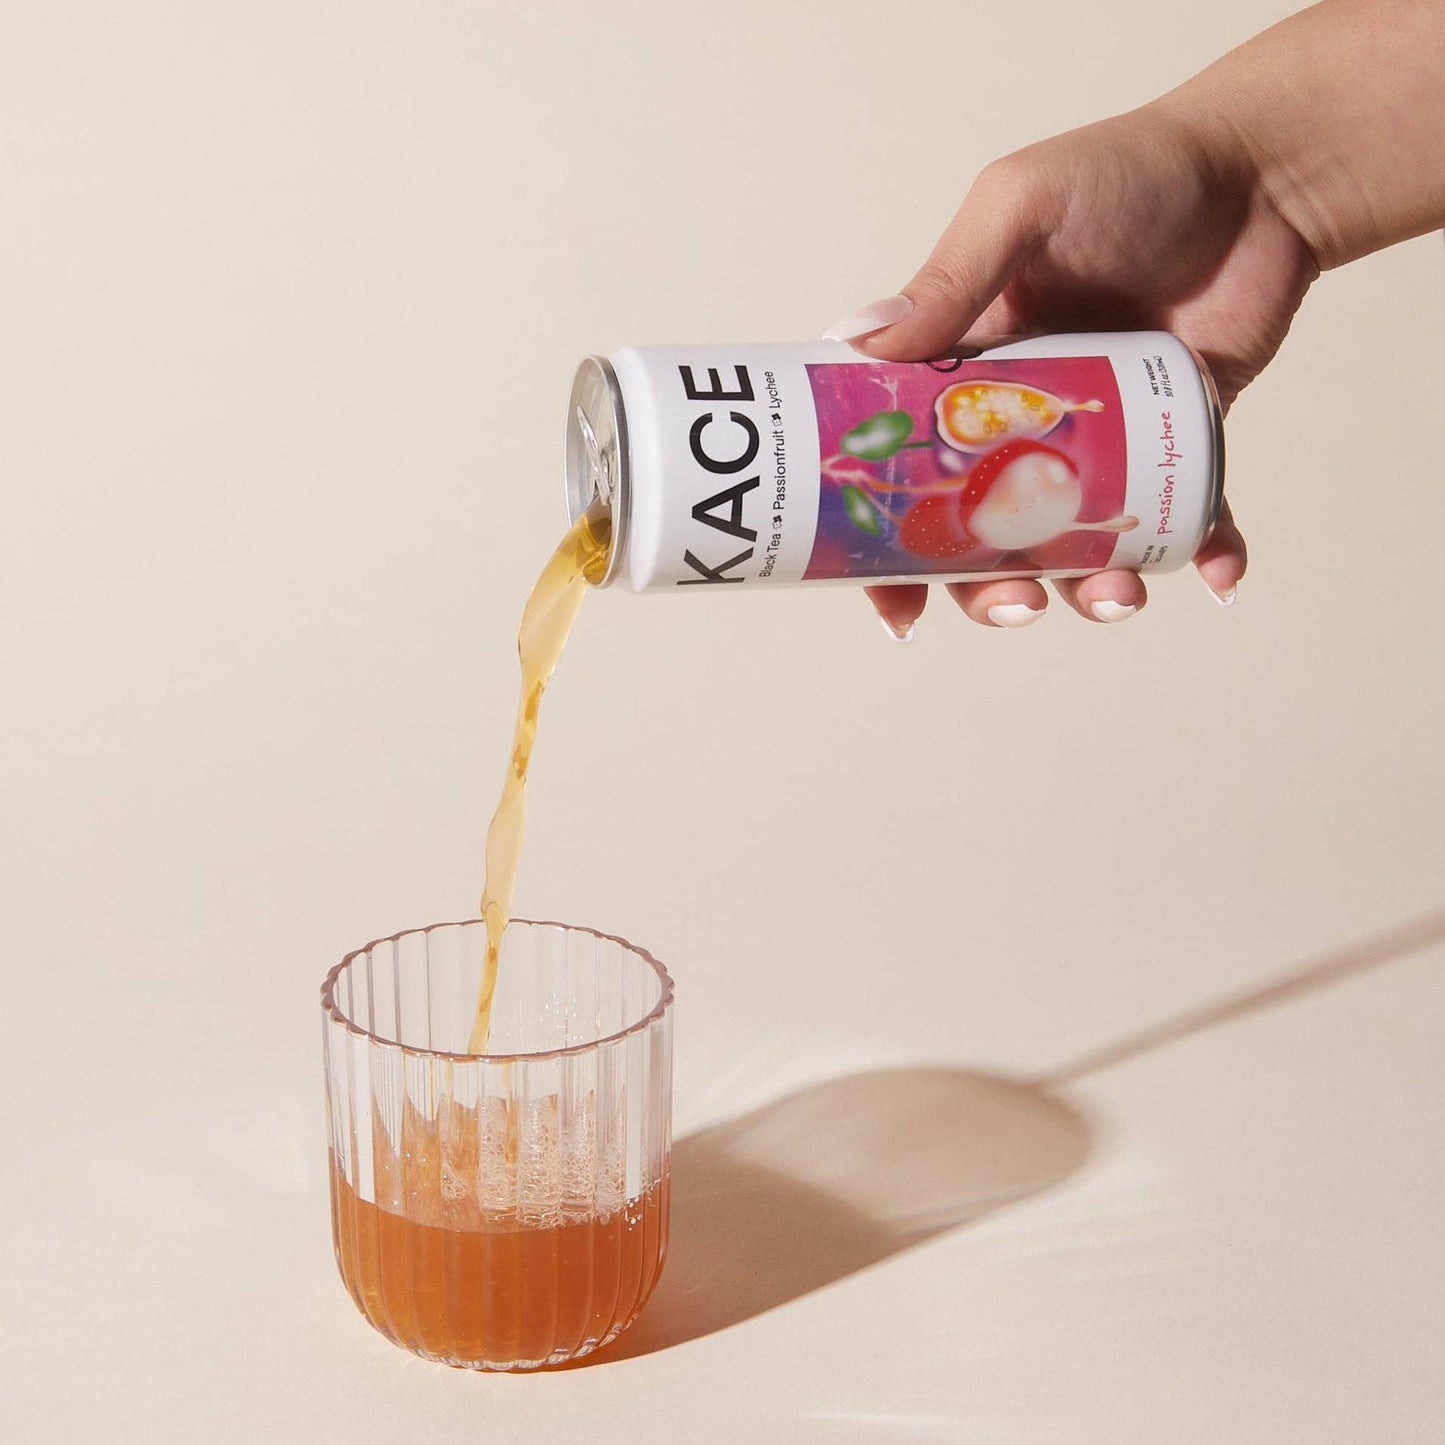 Kace | Passion Lychee Black Tea